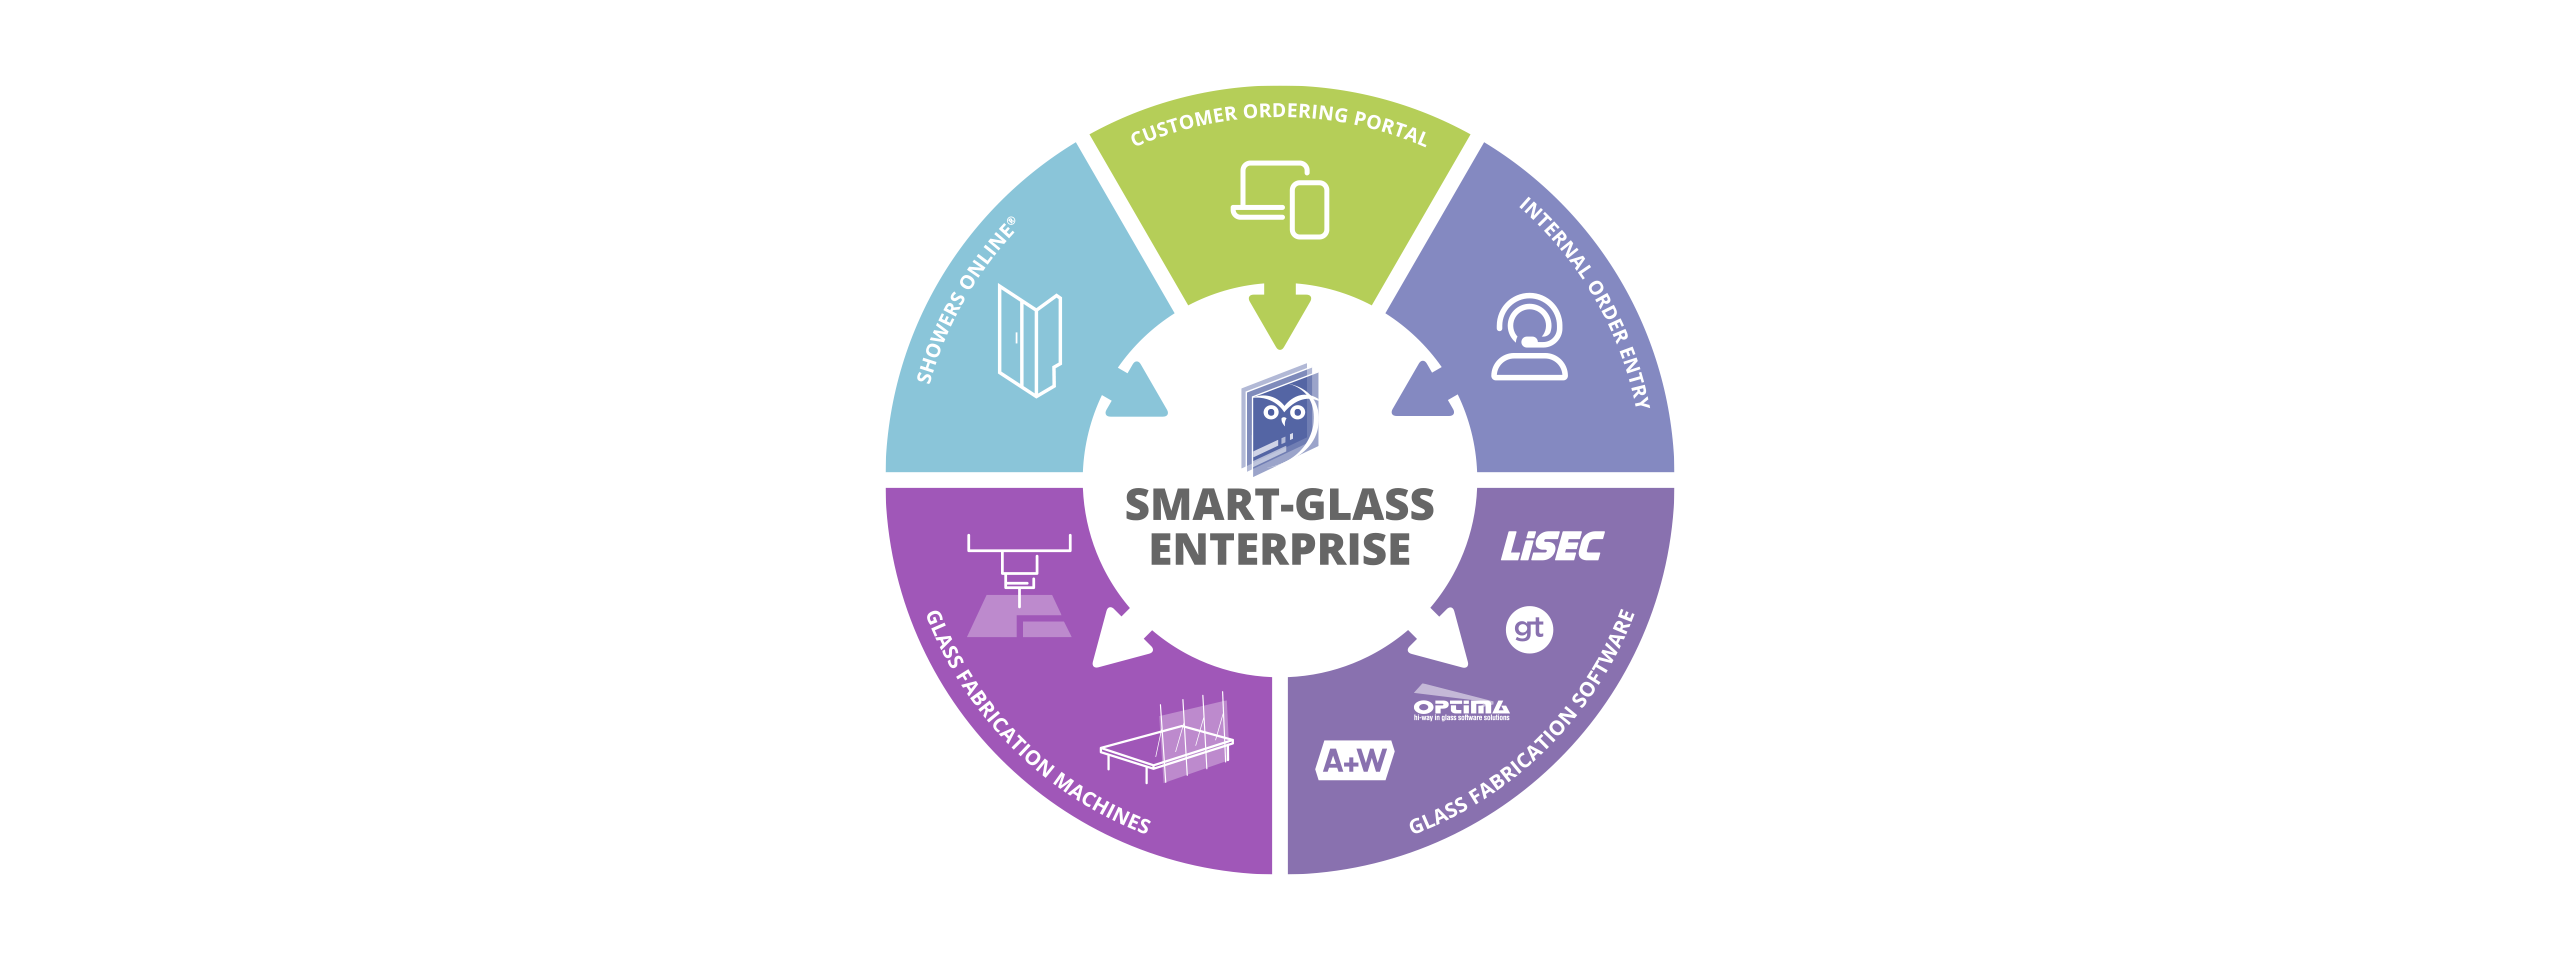 Smart-Glass Enterprise for Processors